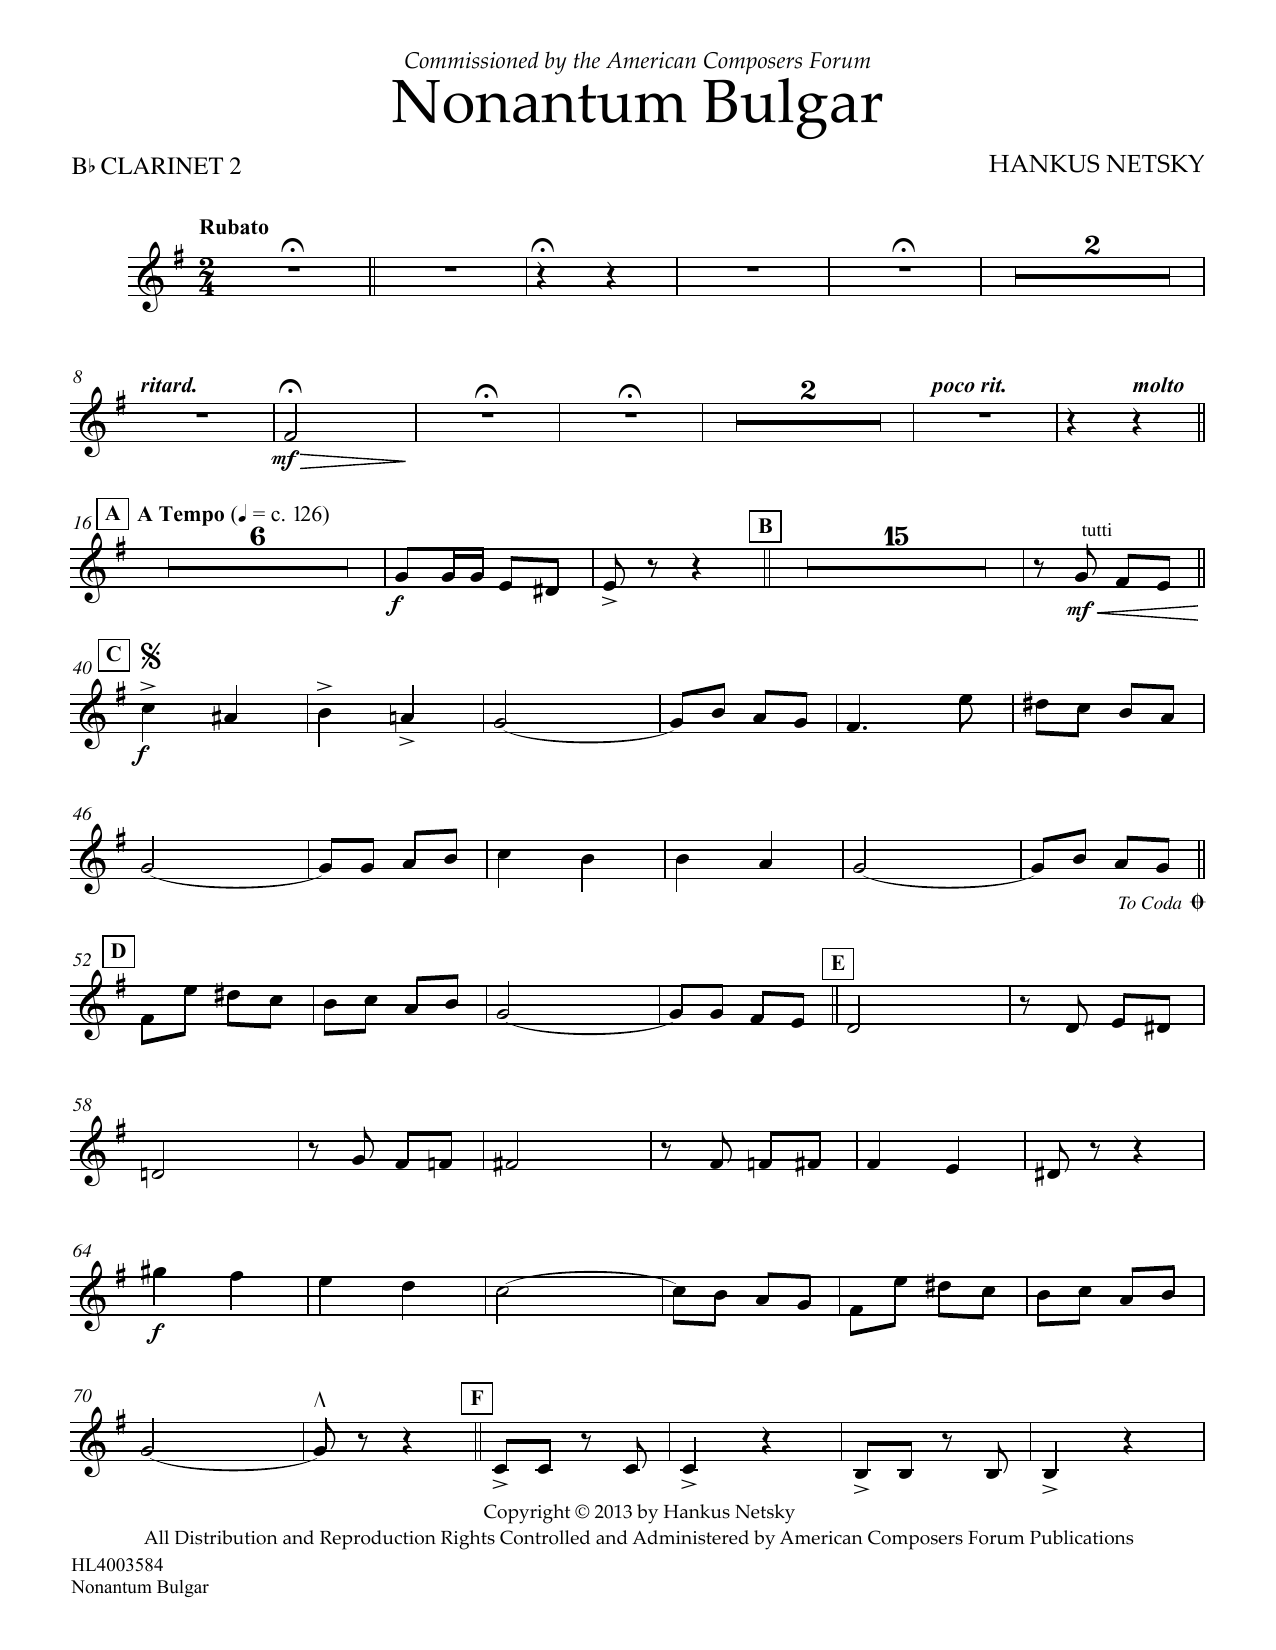 Download Hankus Netsky Nonantum Bulgar - Clarinet 2 Sheet Music